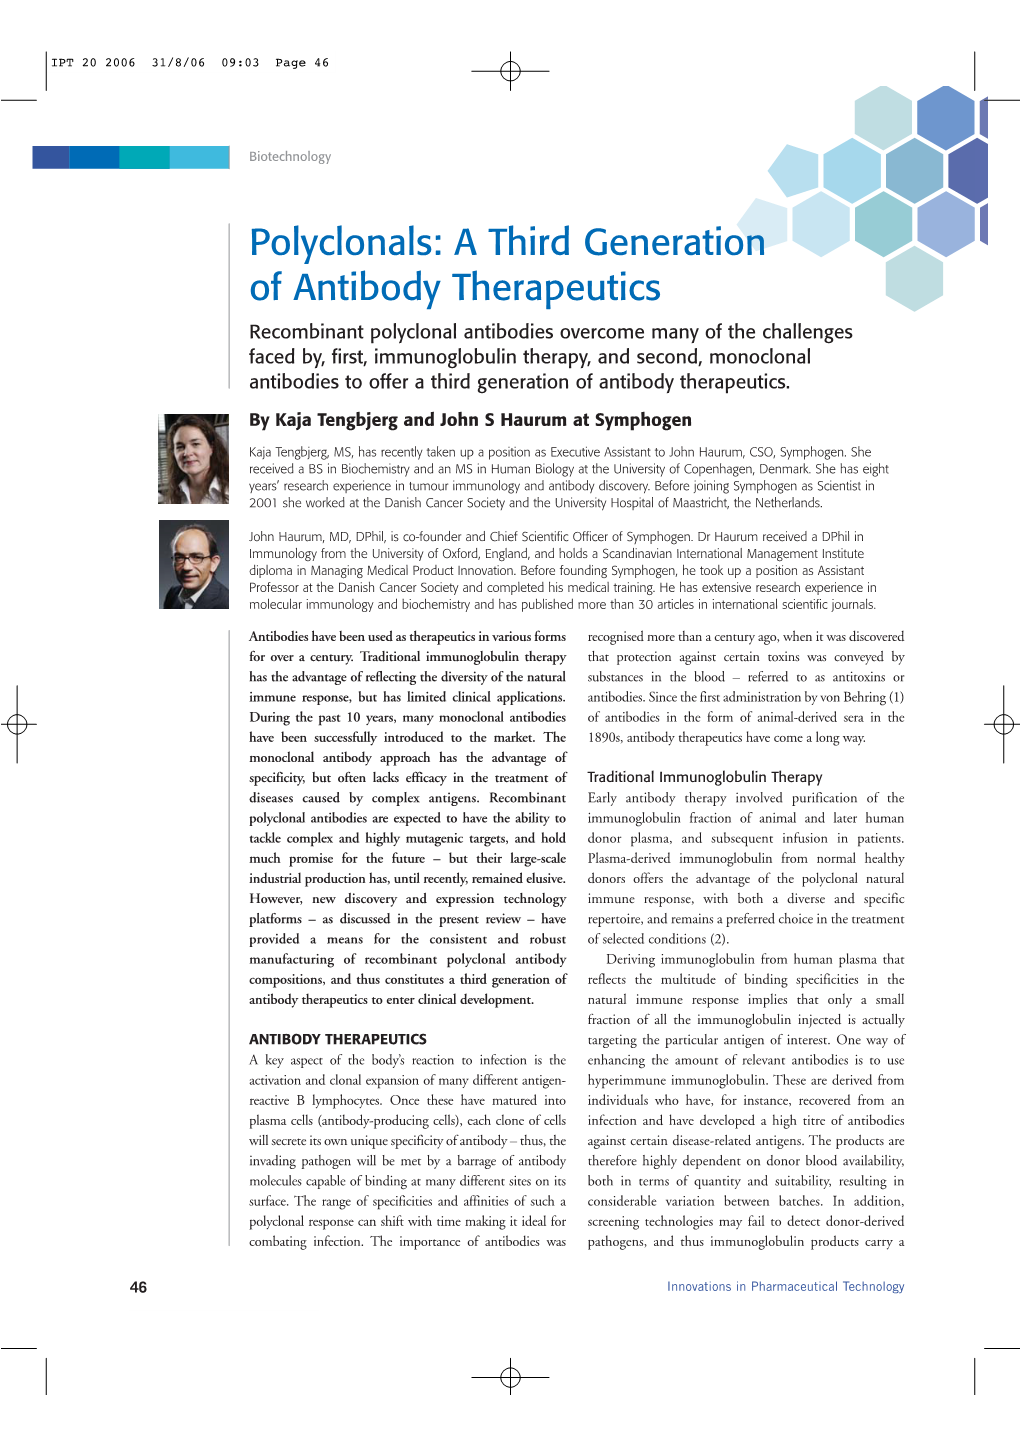 Polyclonals: a Third Generation of Antibody Therapeutics